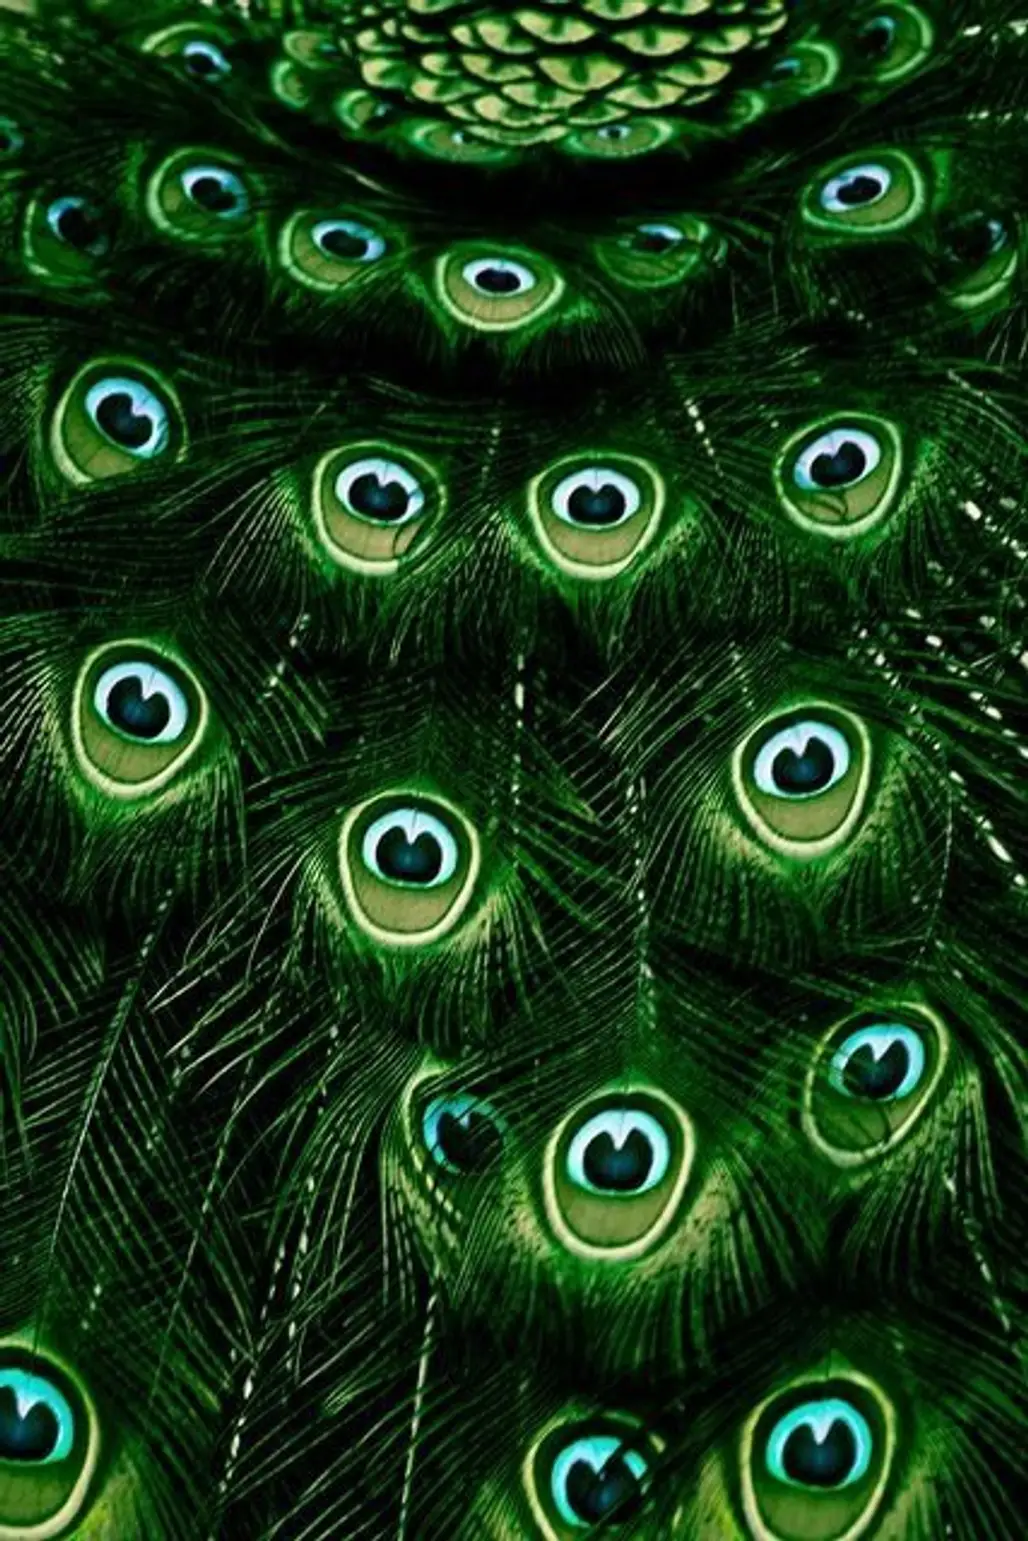 Deep Emerald Green Peacock Feathers